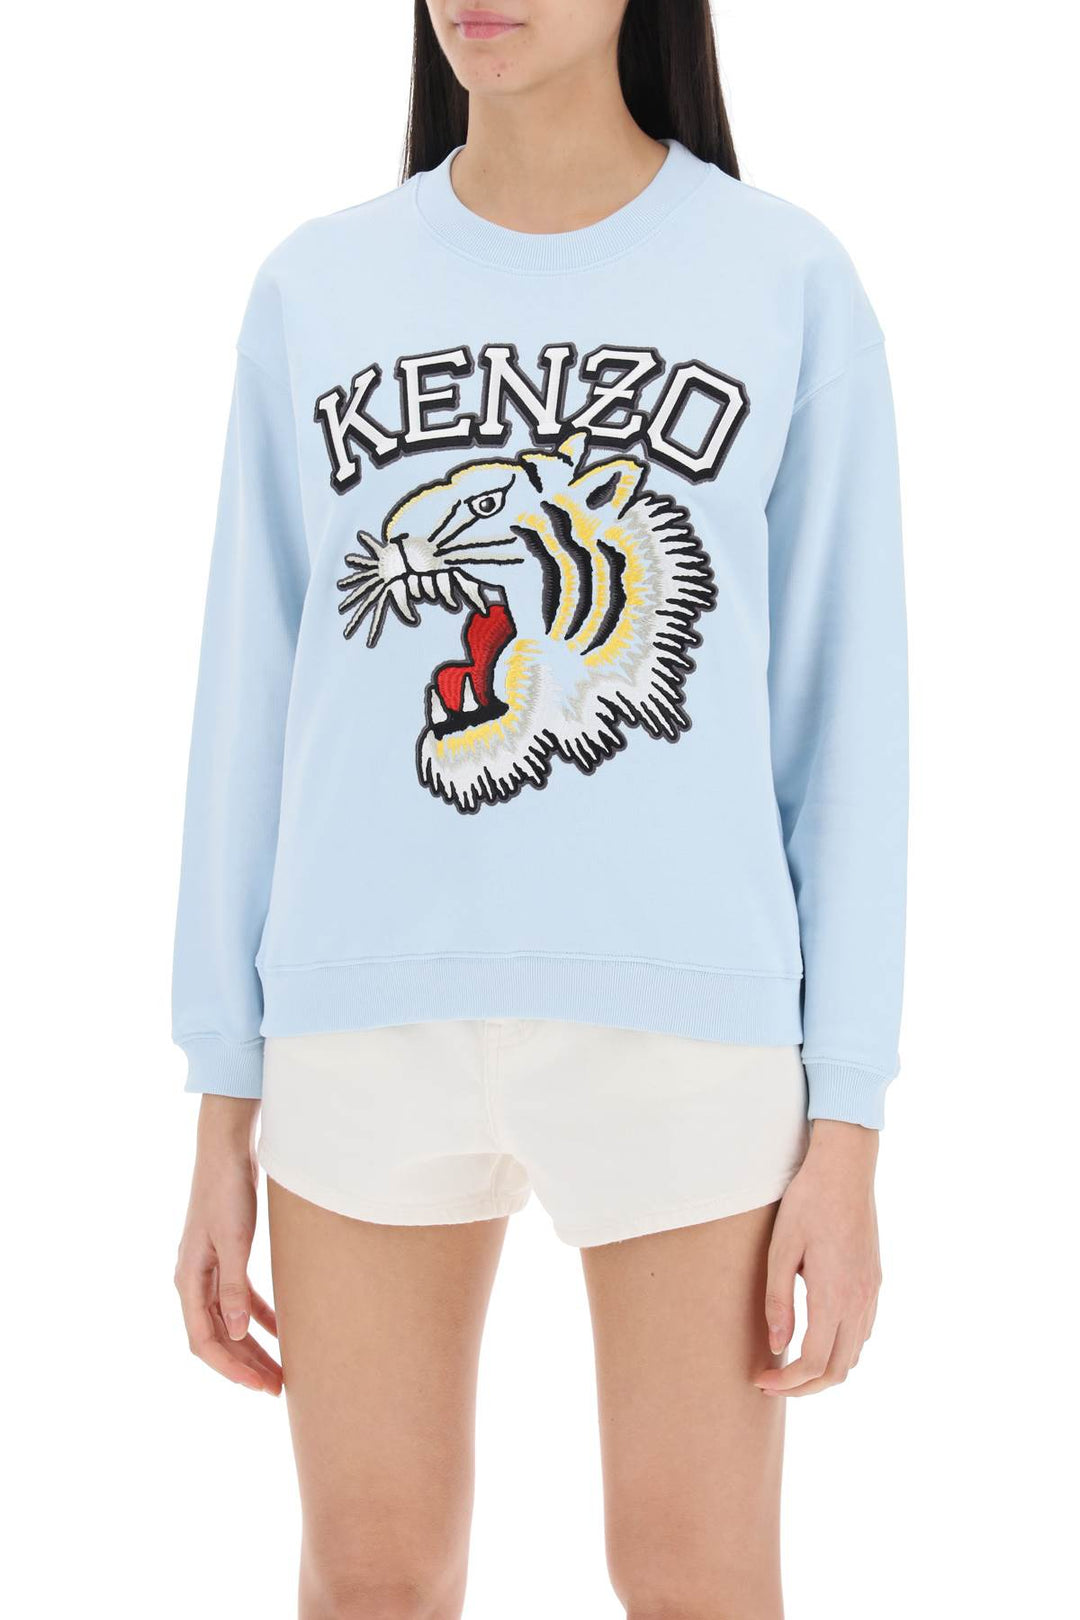 Kenzo Tiger Varsity Crew Neck Sweatshirt   Celeste